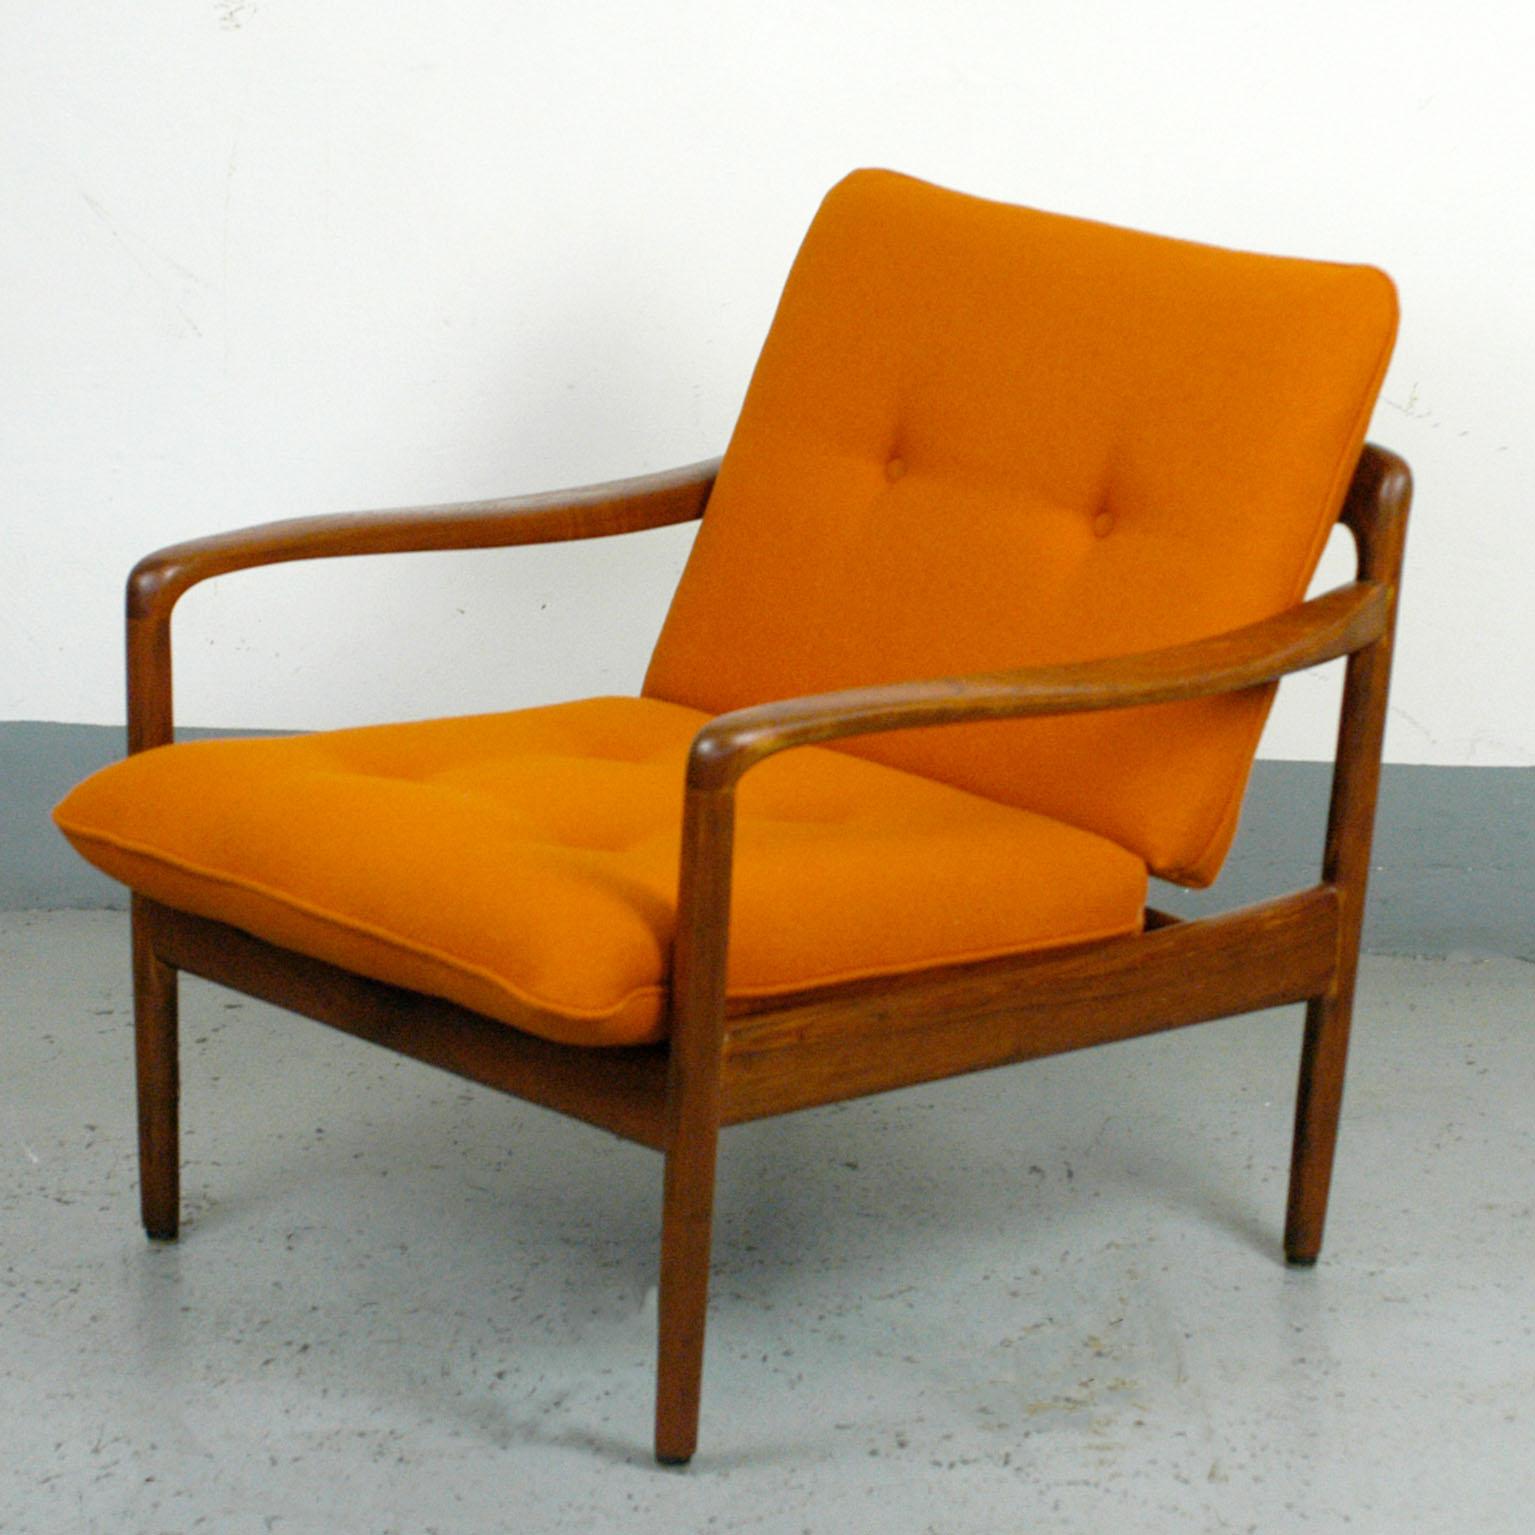 Scandinavian Modern Midcentury Orange Teak Easy Chair by Knoll Antimott, Germany